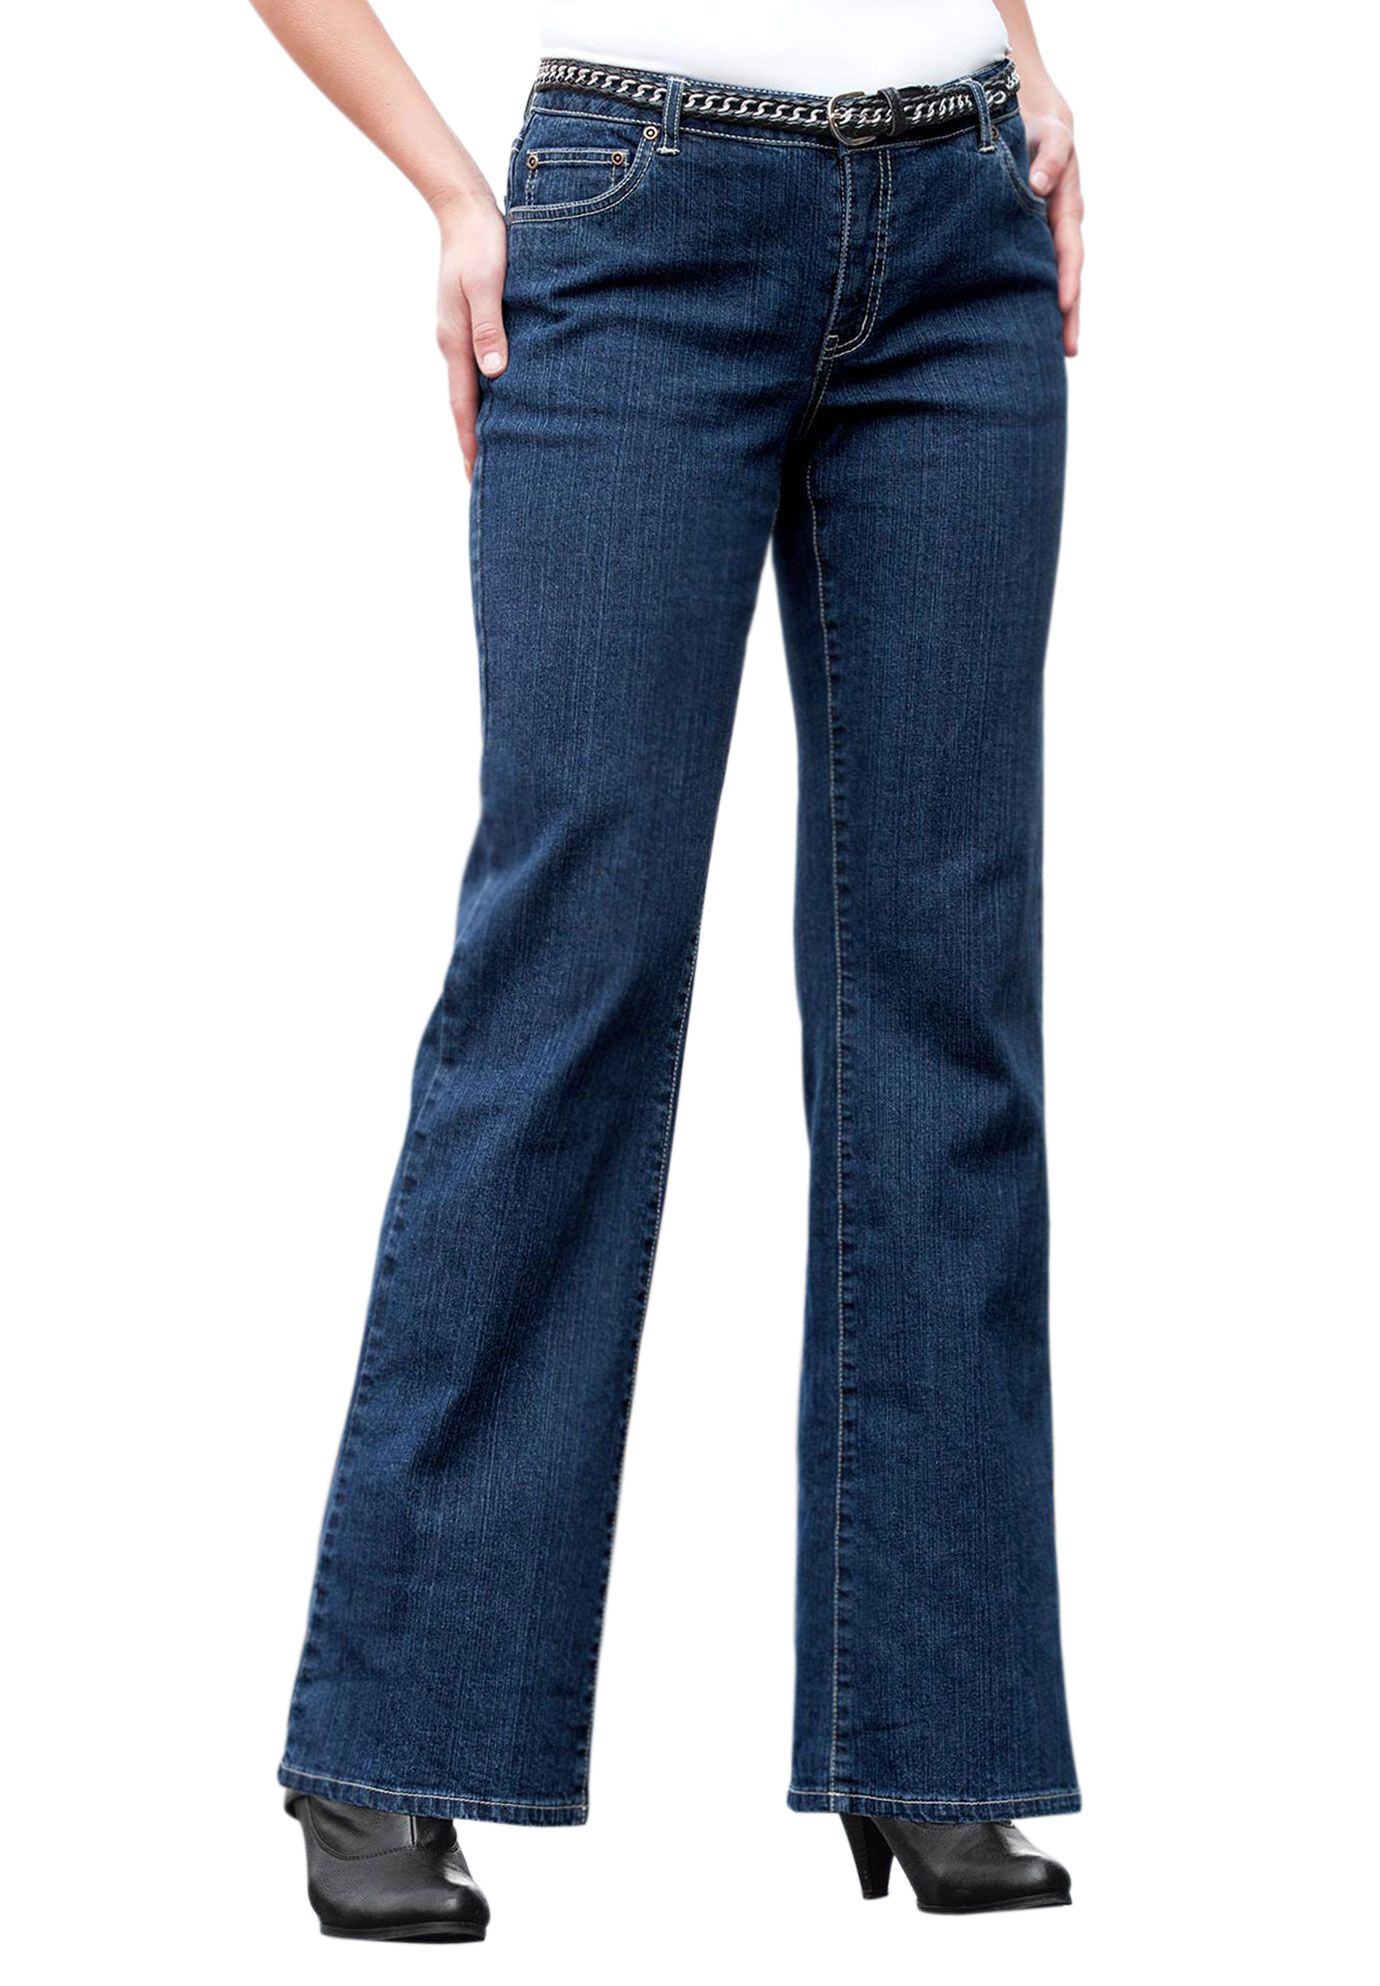 black jeans size 22